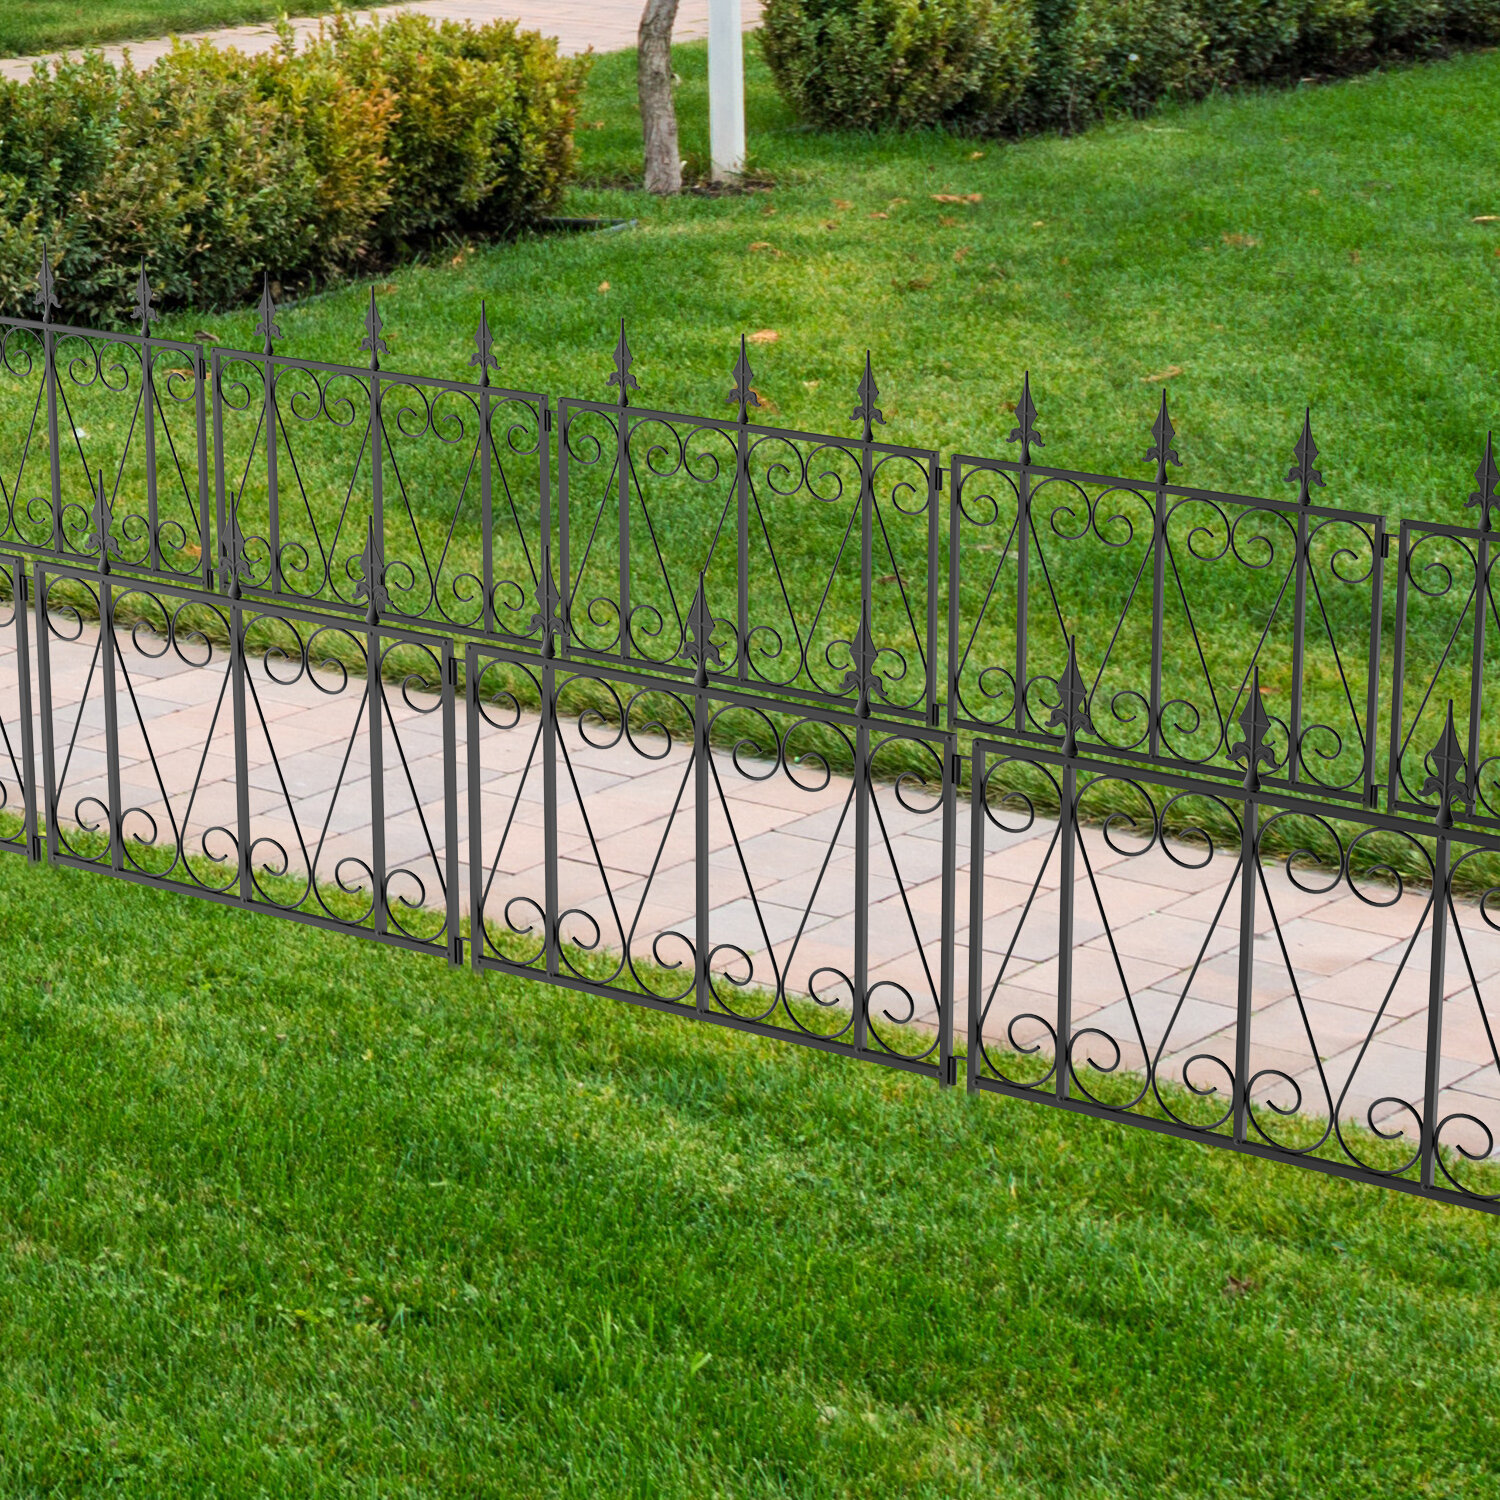 Furniture Friend 24 X 24 Garden Home Decorative Garden Metal Fence 4 Panels In Total Reviews Wayfair Ca